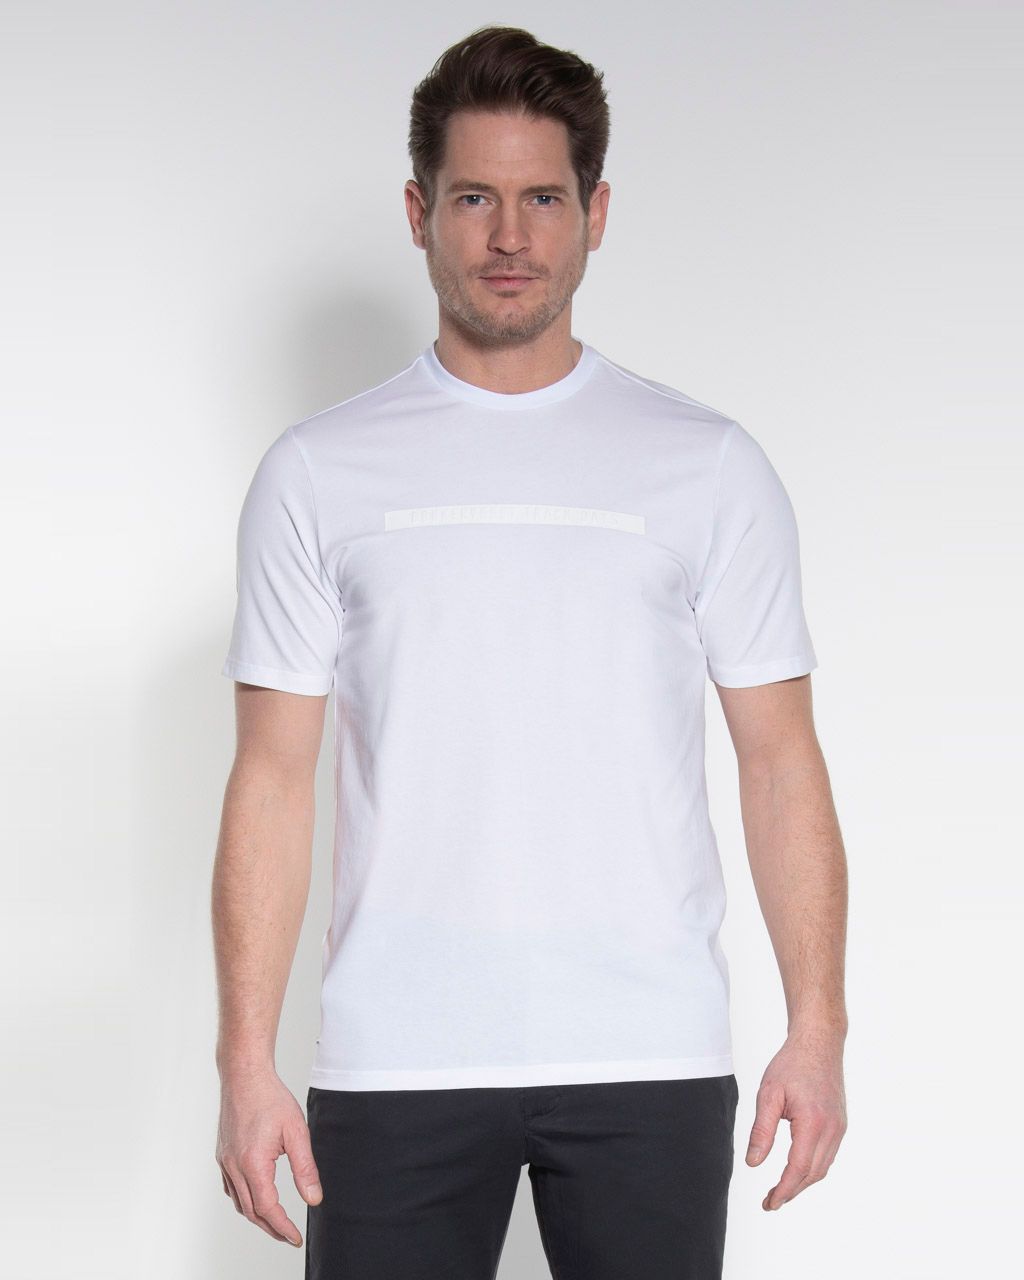 Donkervoort T-shirt KM Off White uni 053753-003-L